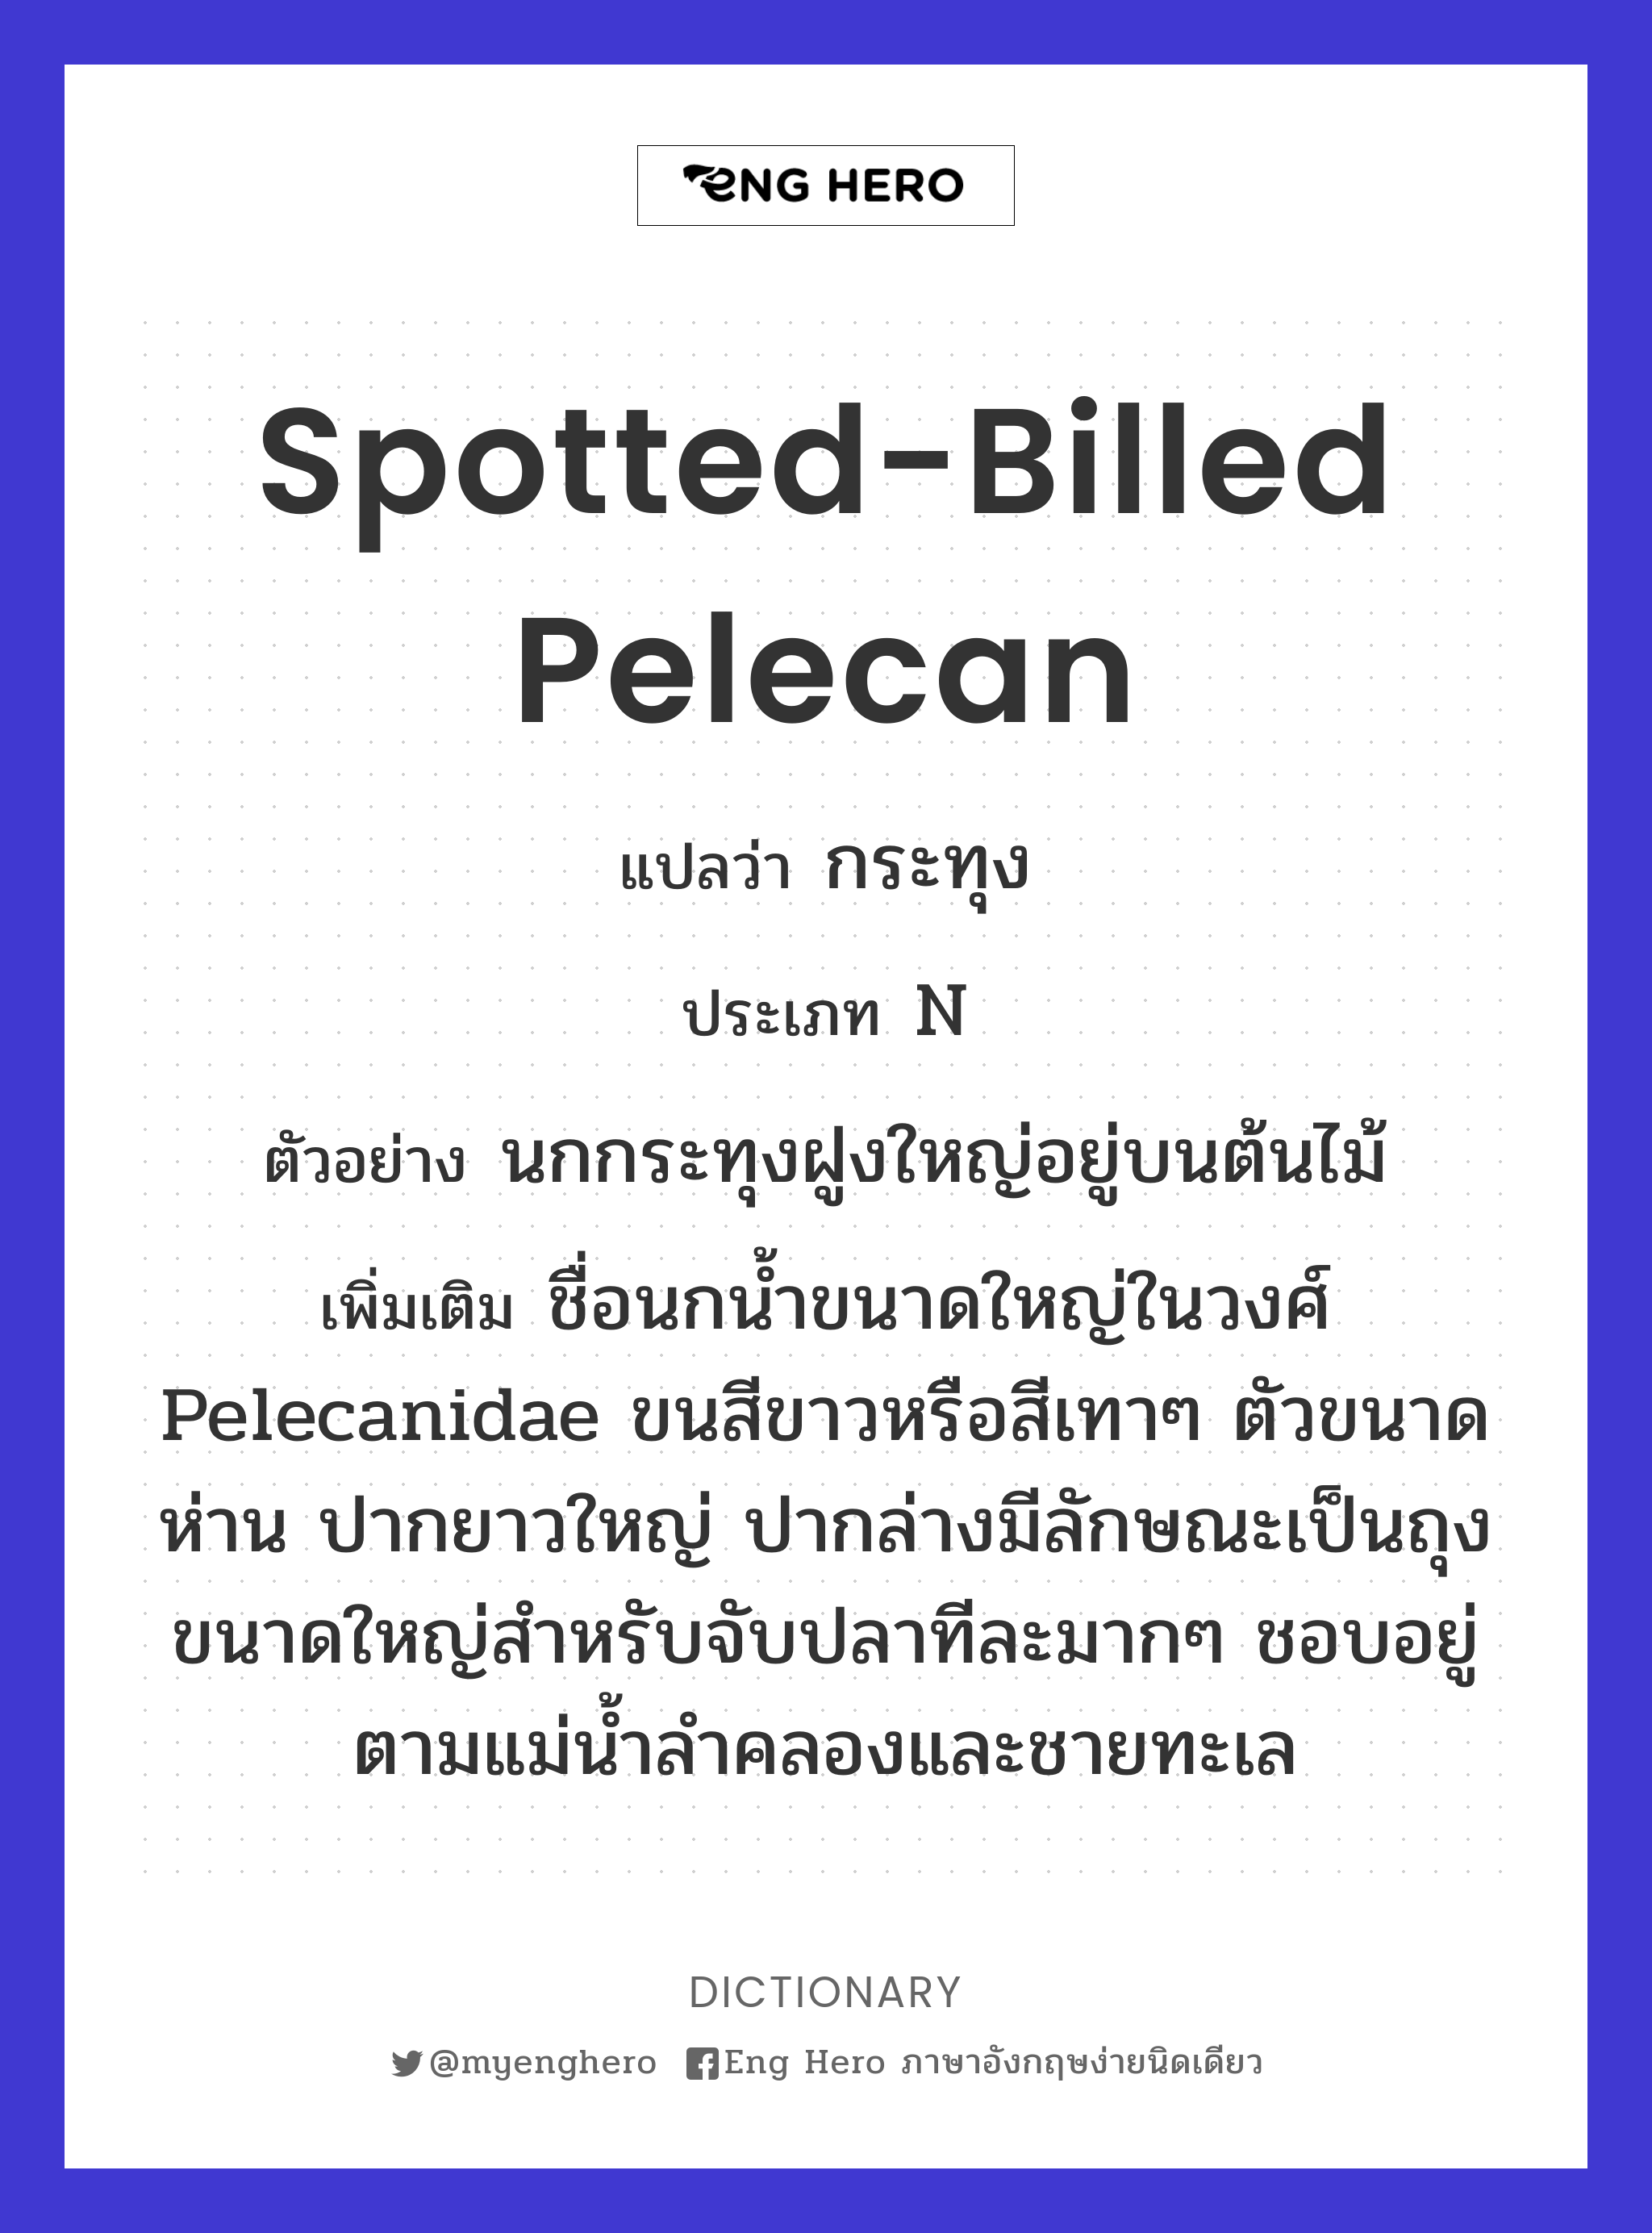 Spotted-billed Pelecan